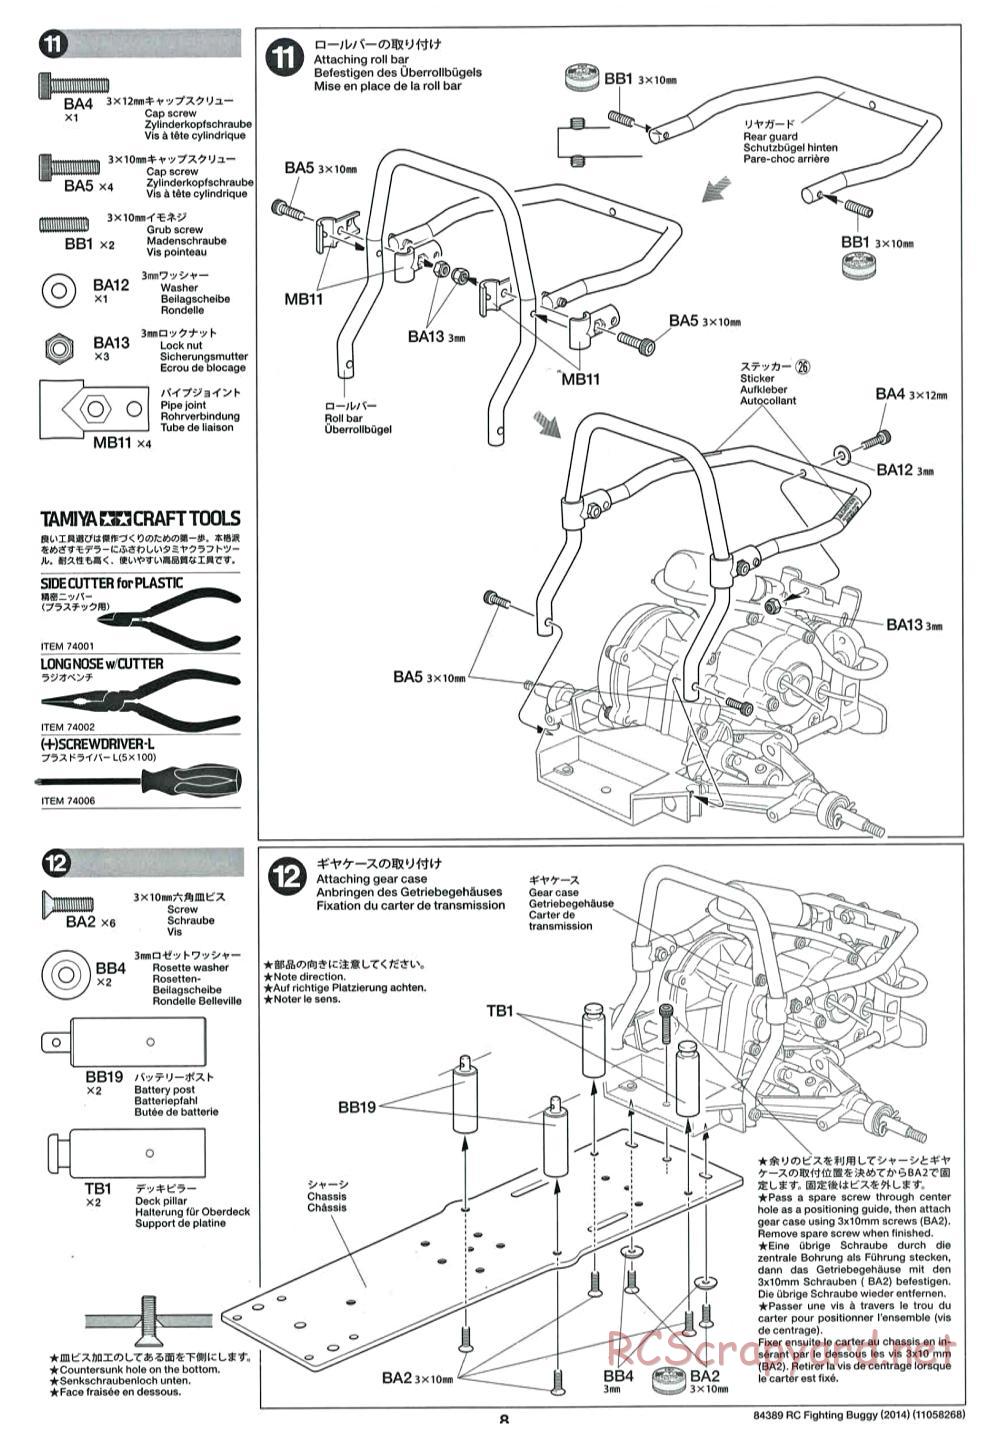 Tamiya - Fighting Buggy (2014) Chassis - Manual - Page 8